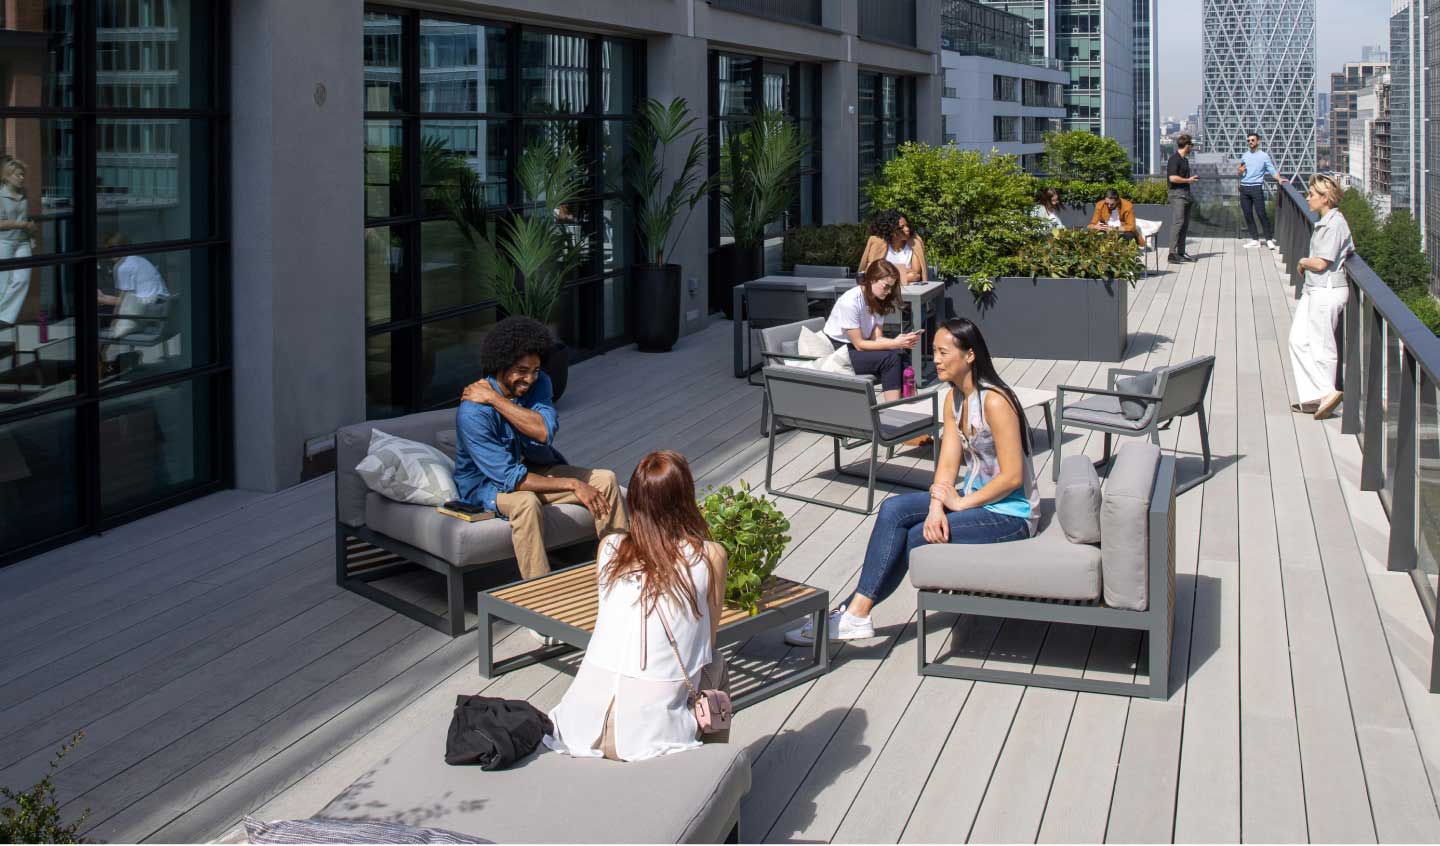 People sitting outside on a terrace